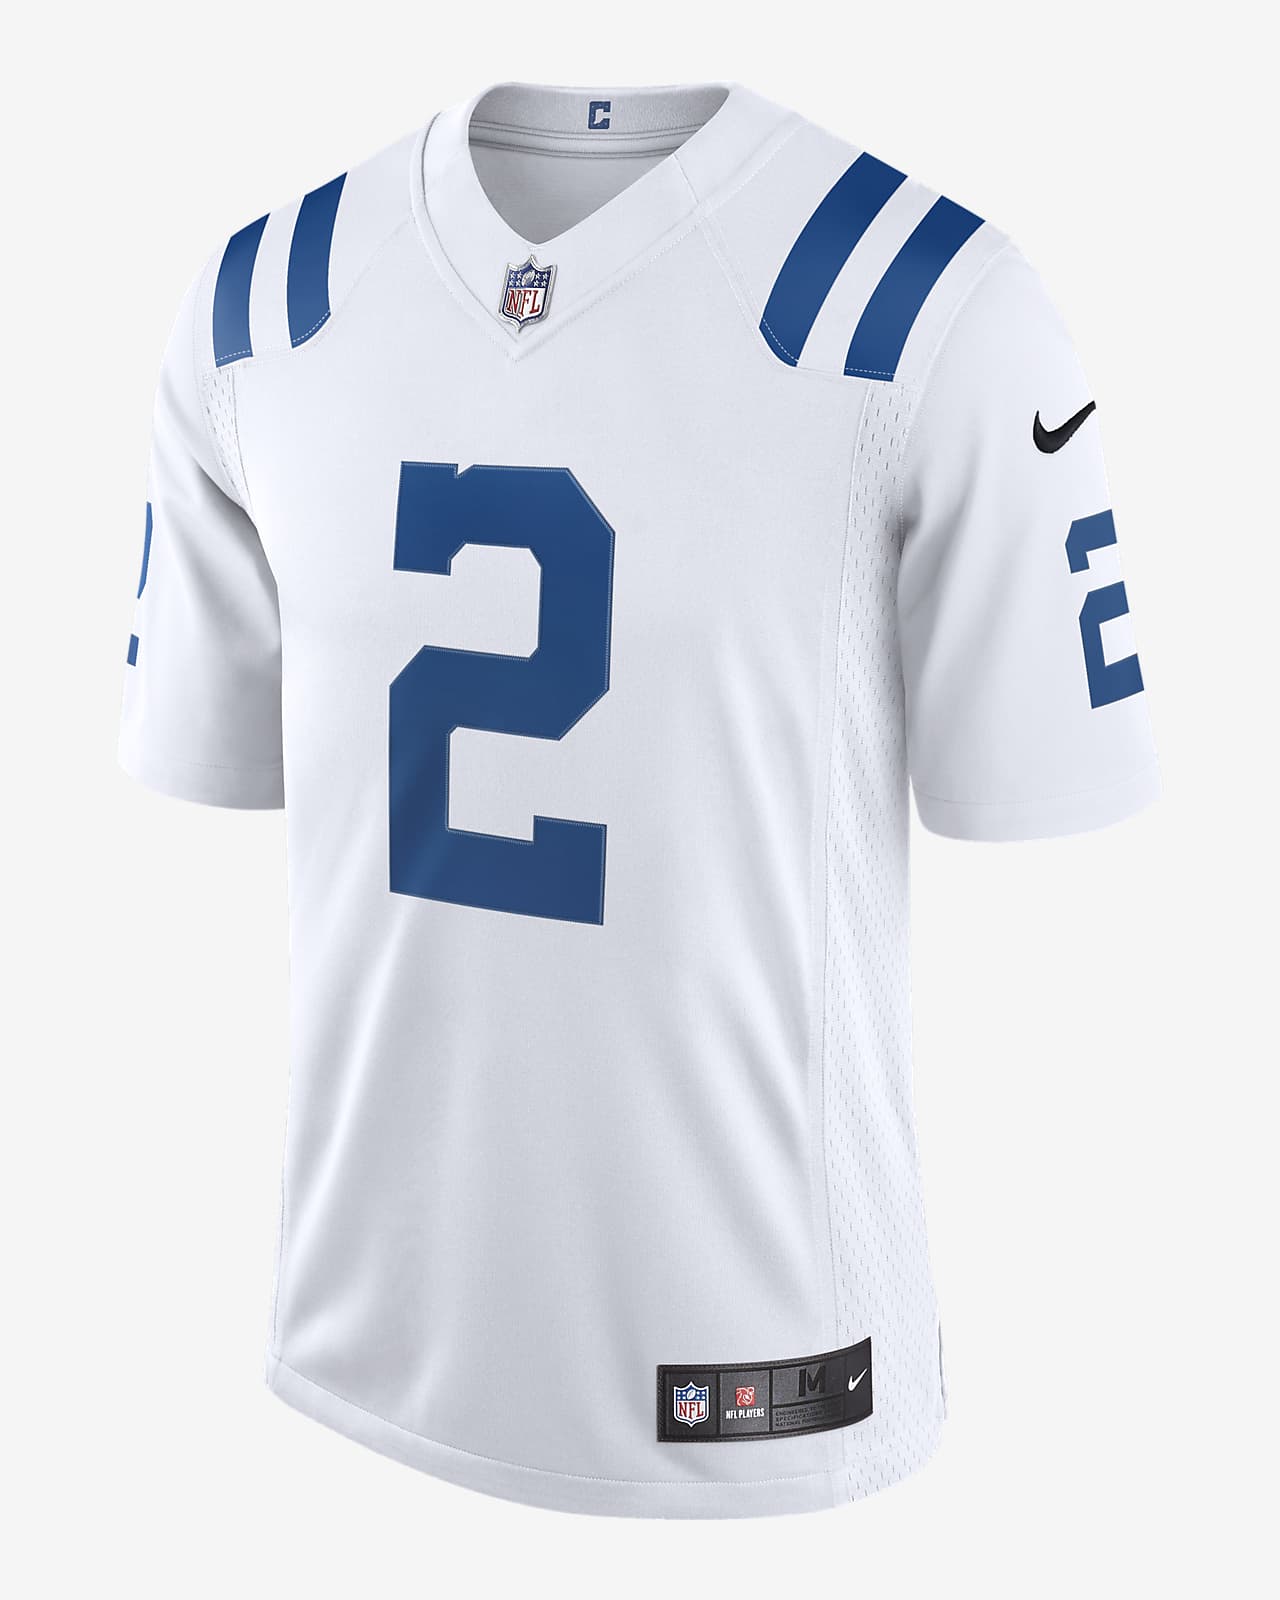 Jersey fútbol americano edición para hombre NFL Indianapolis Colts Nike Vapor Untouchable (Carson Wentz).